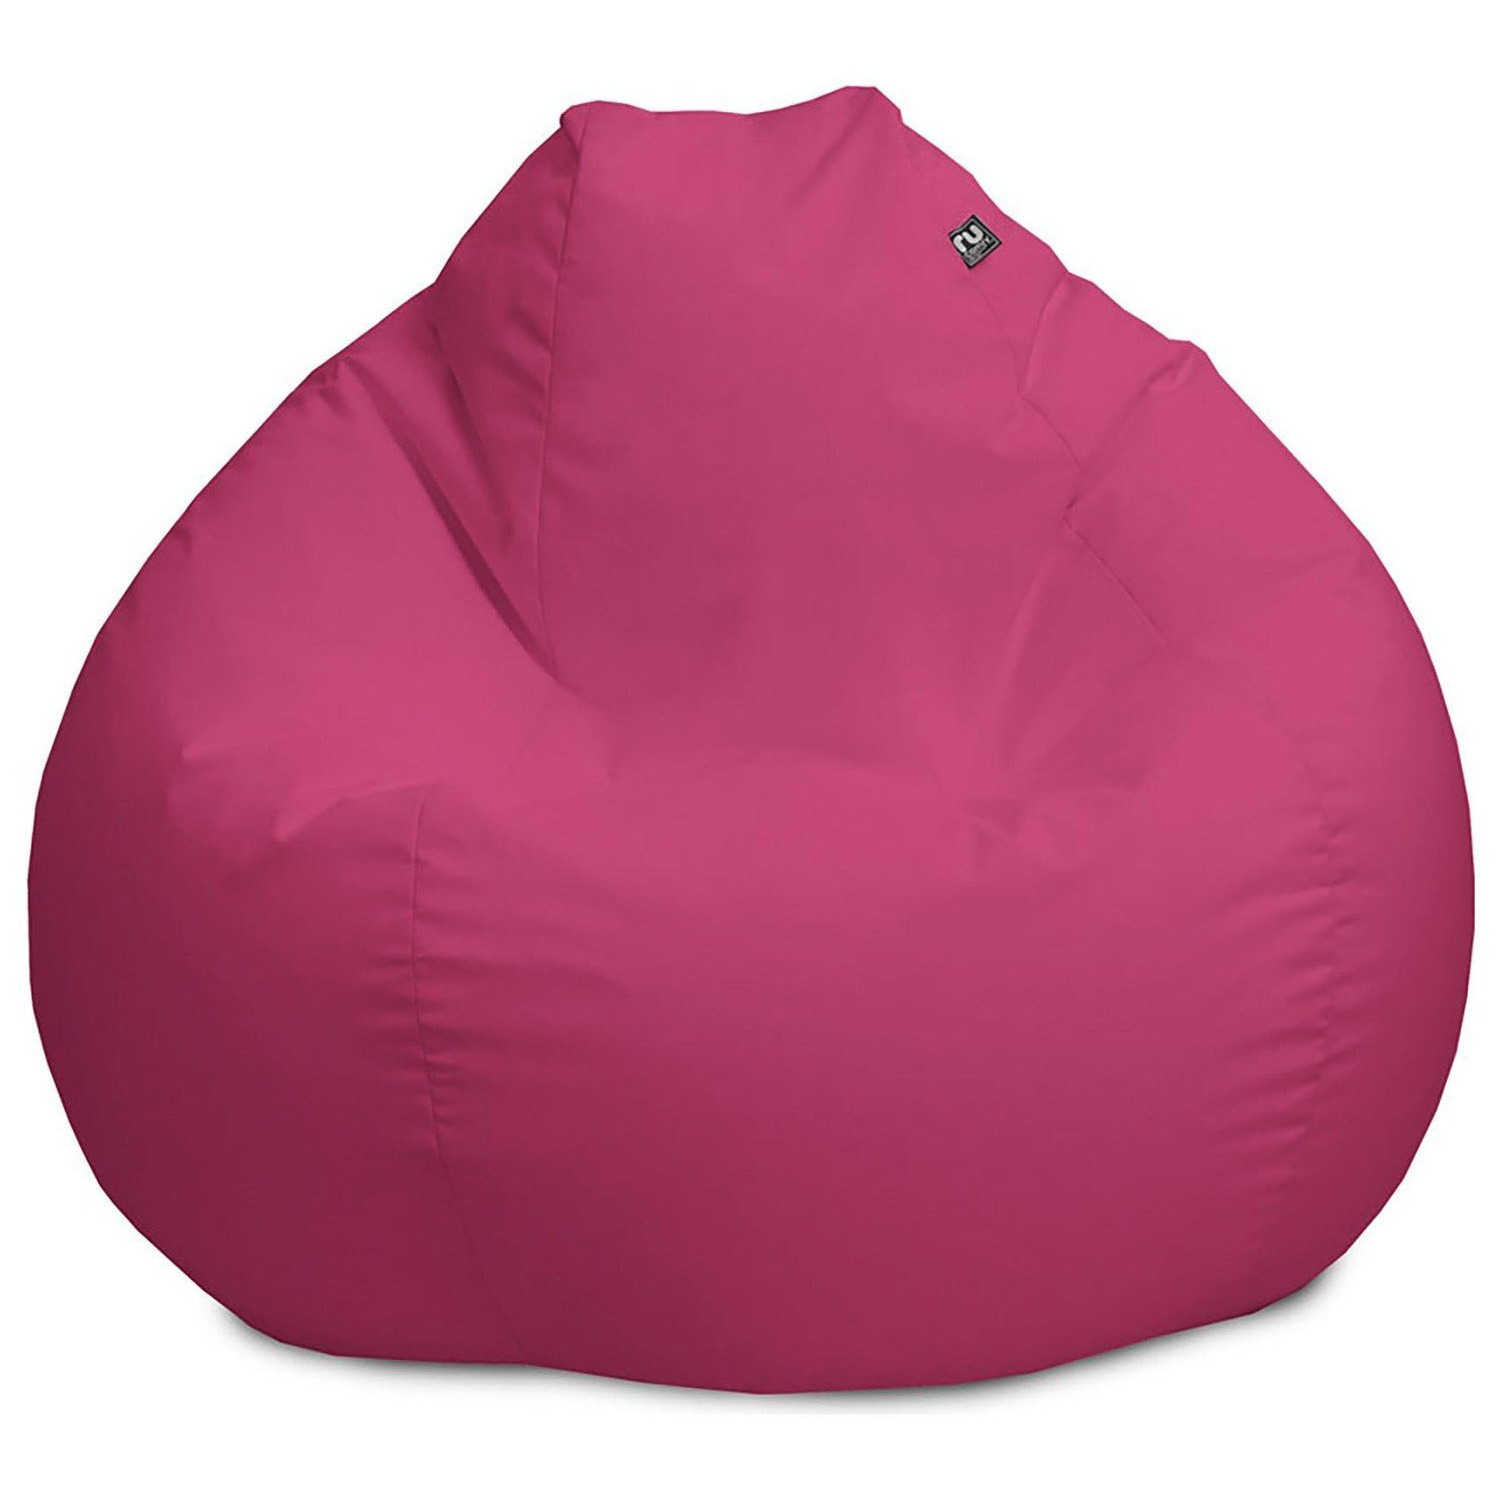 rucomfy Indoor Outdoor Bean Bag - Pink - image 1